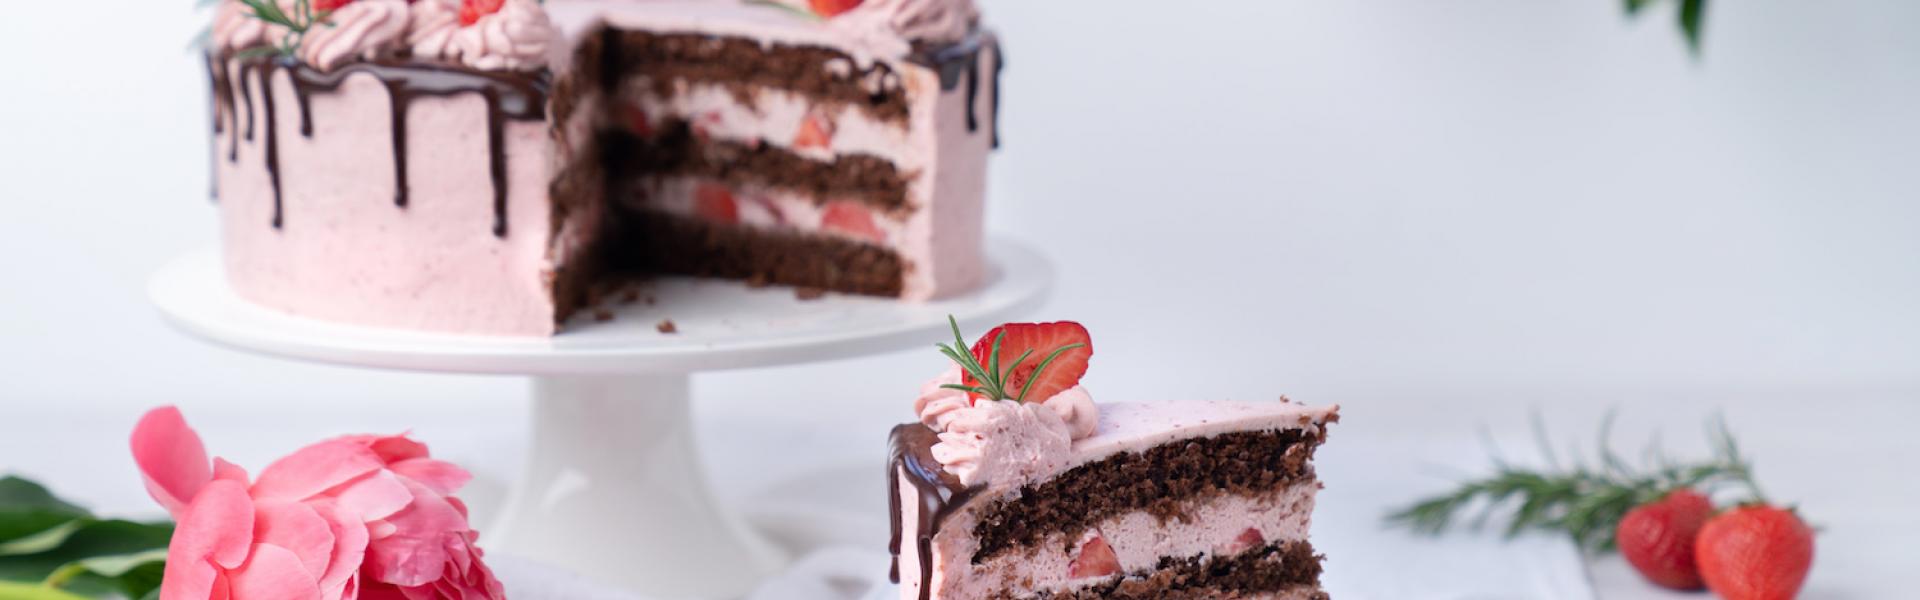 Erdbeer Schoko Torte Aka Drip Cake Von Sally Simply Yummy